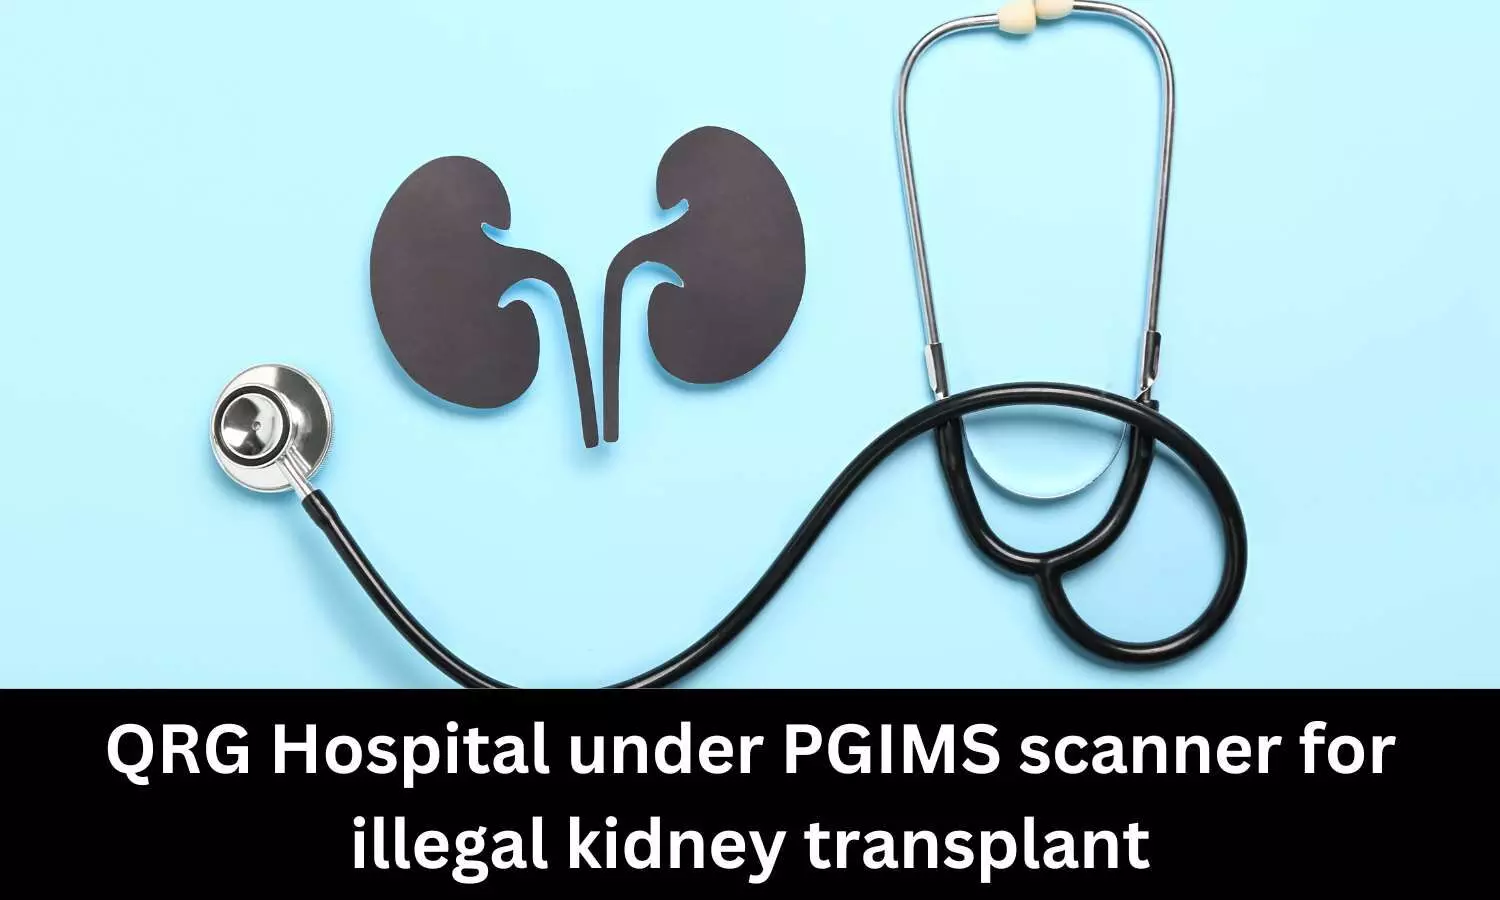 PGIMS serves notice to QRG Hospital for illegal kidney transplant